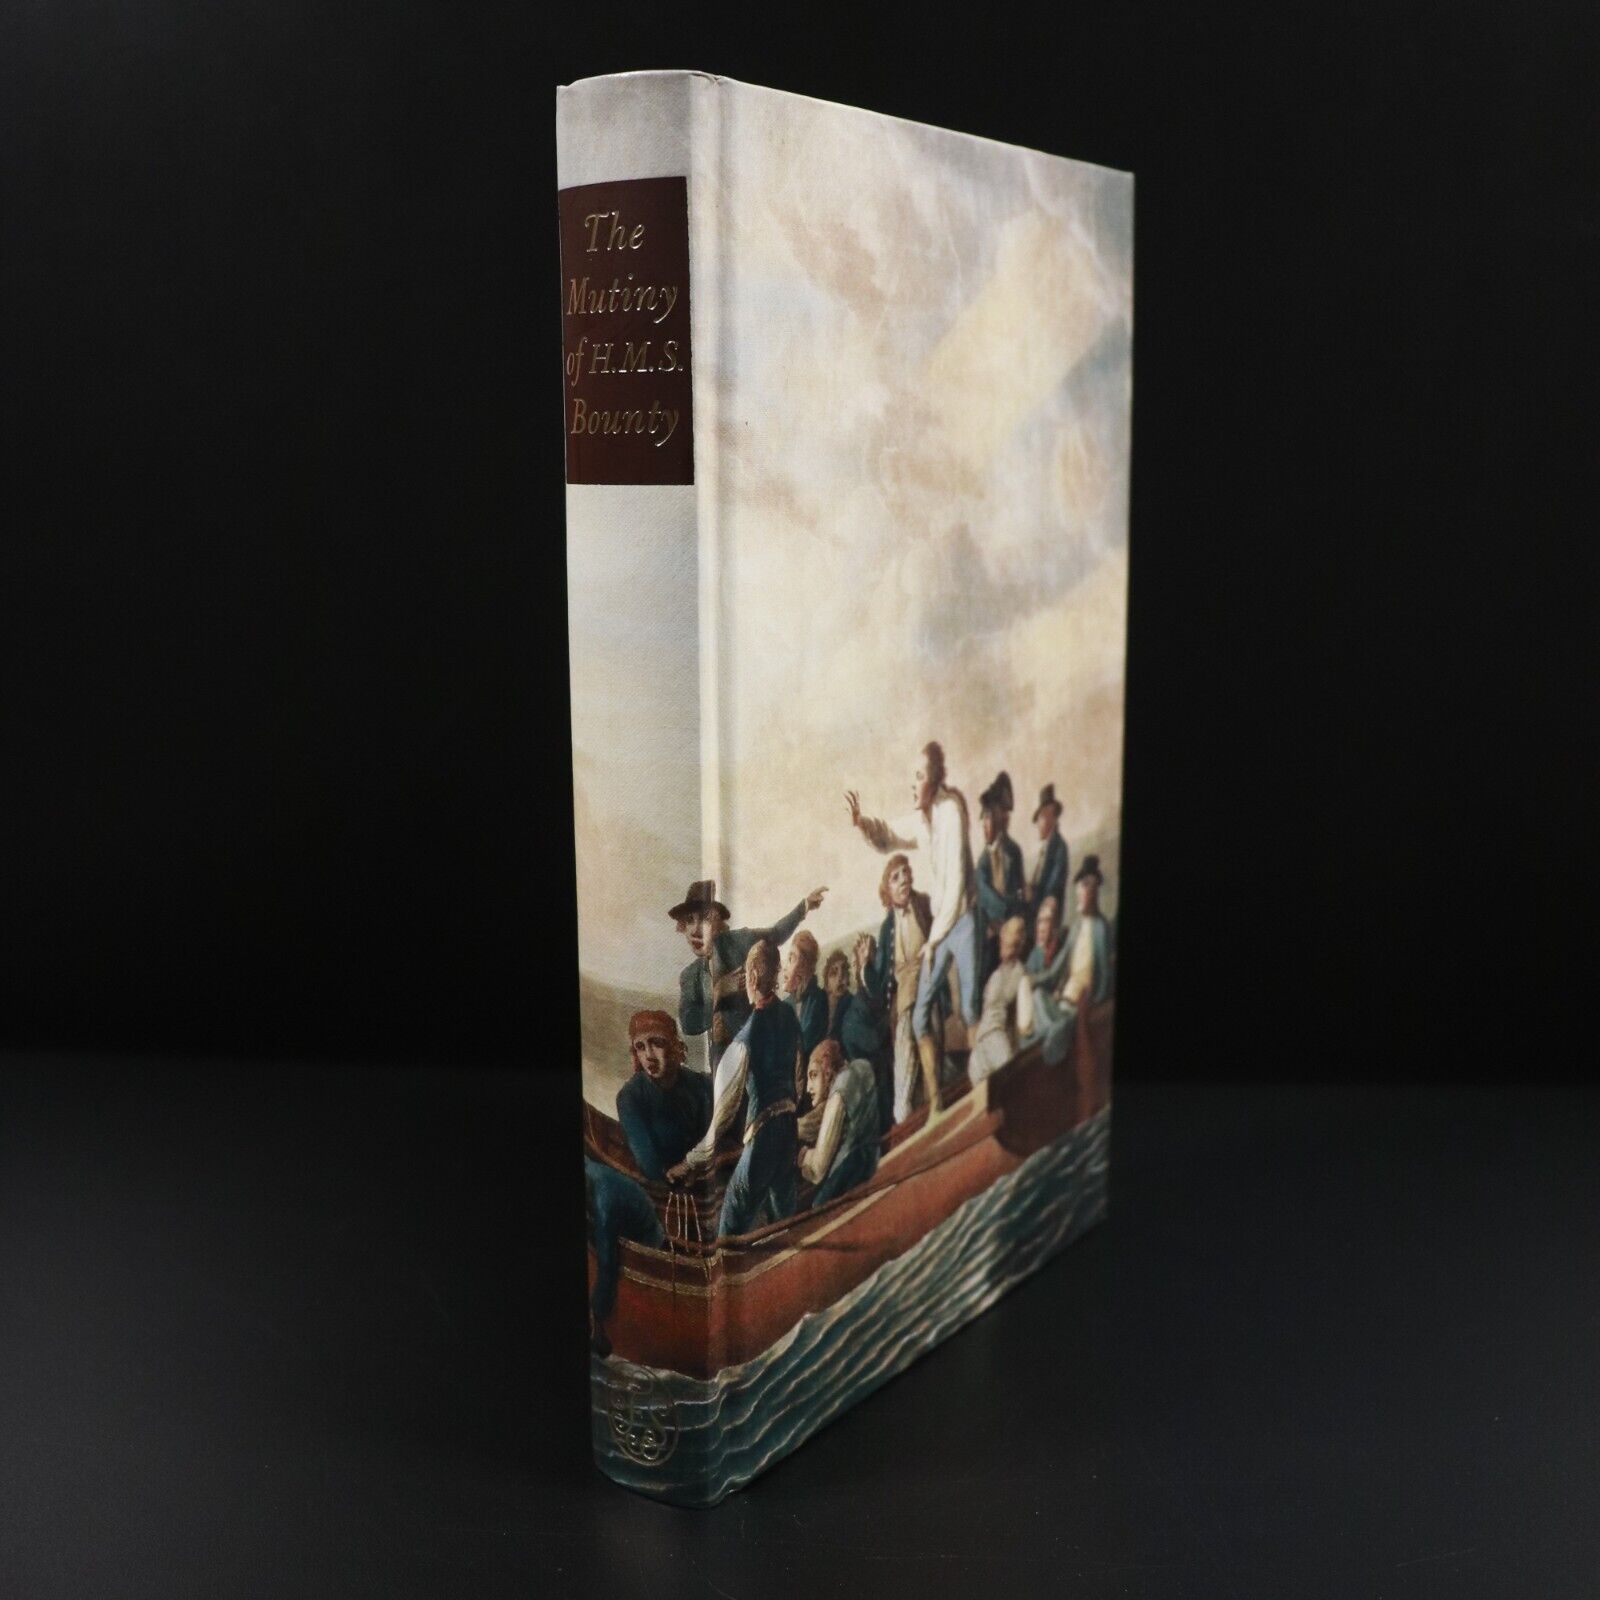 1999 History Of Mutiny On Bounty - Folio Society - British Maritime History Book